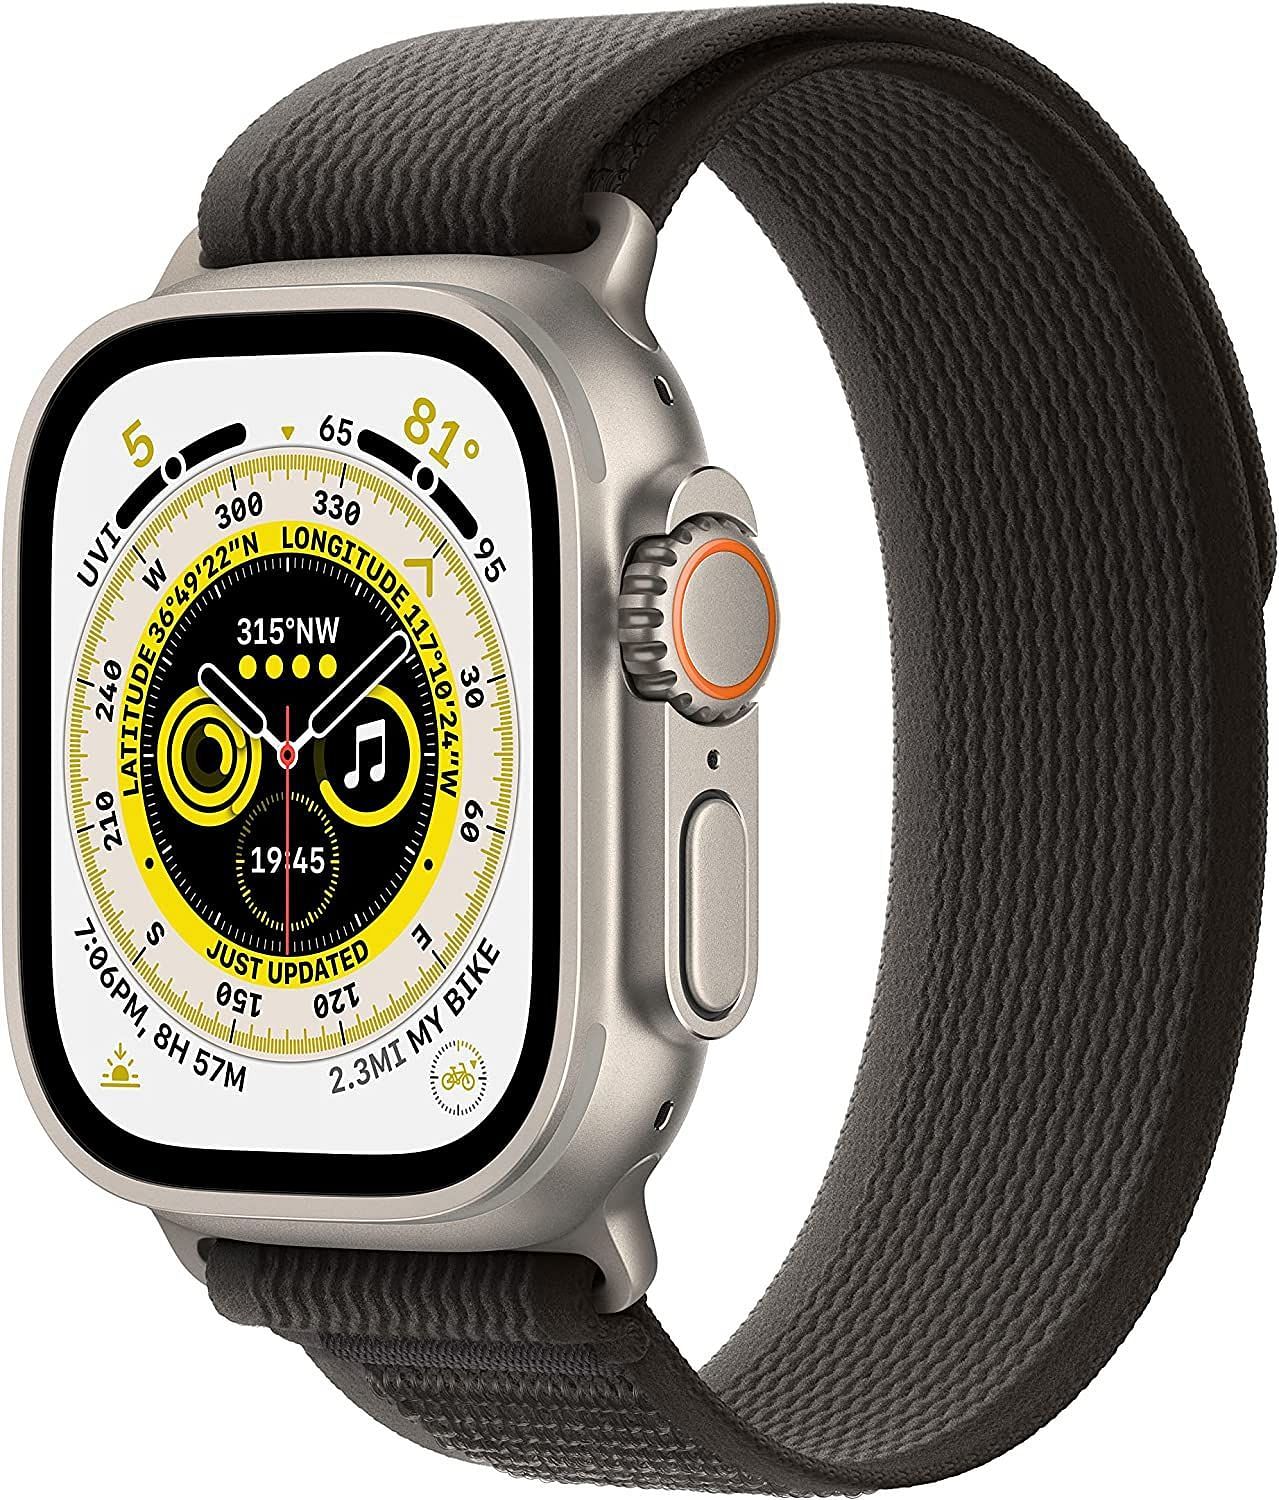 The Apple Watch Ultra (Image via Amazon)